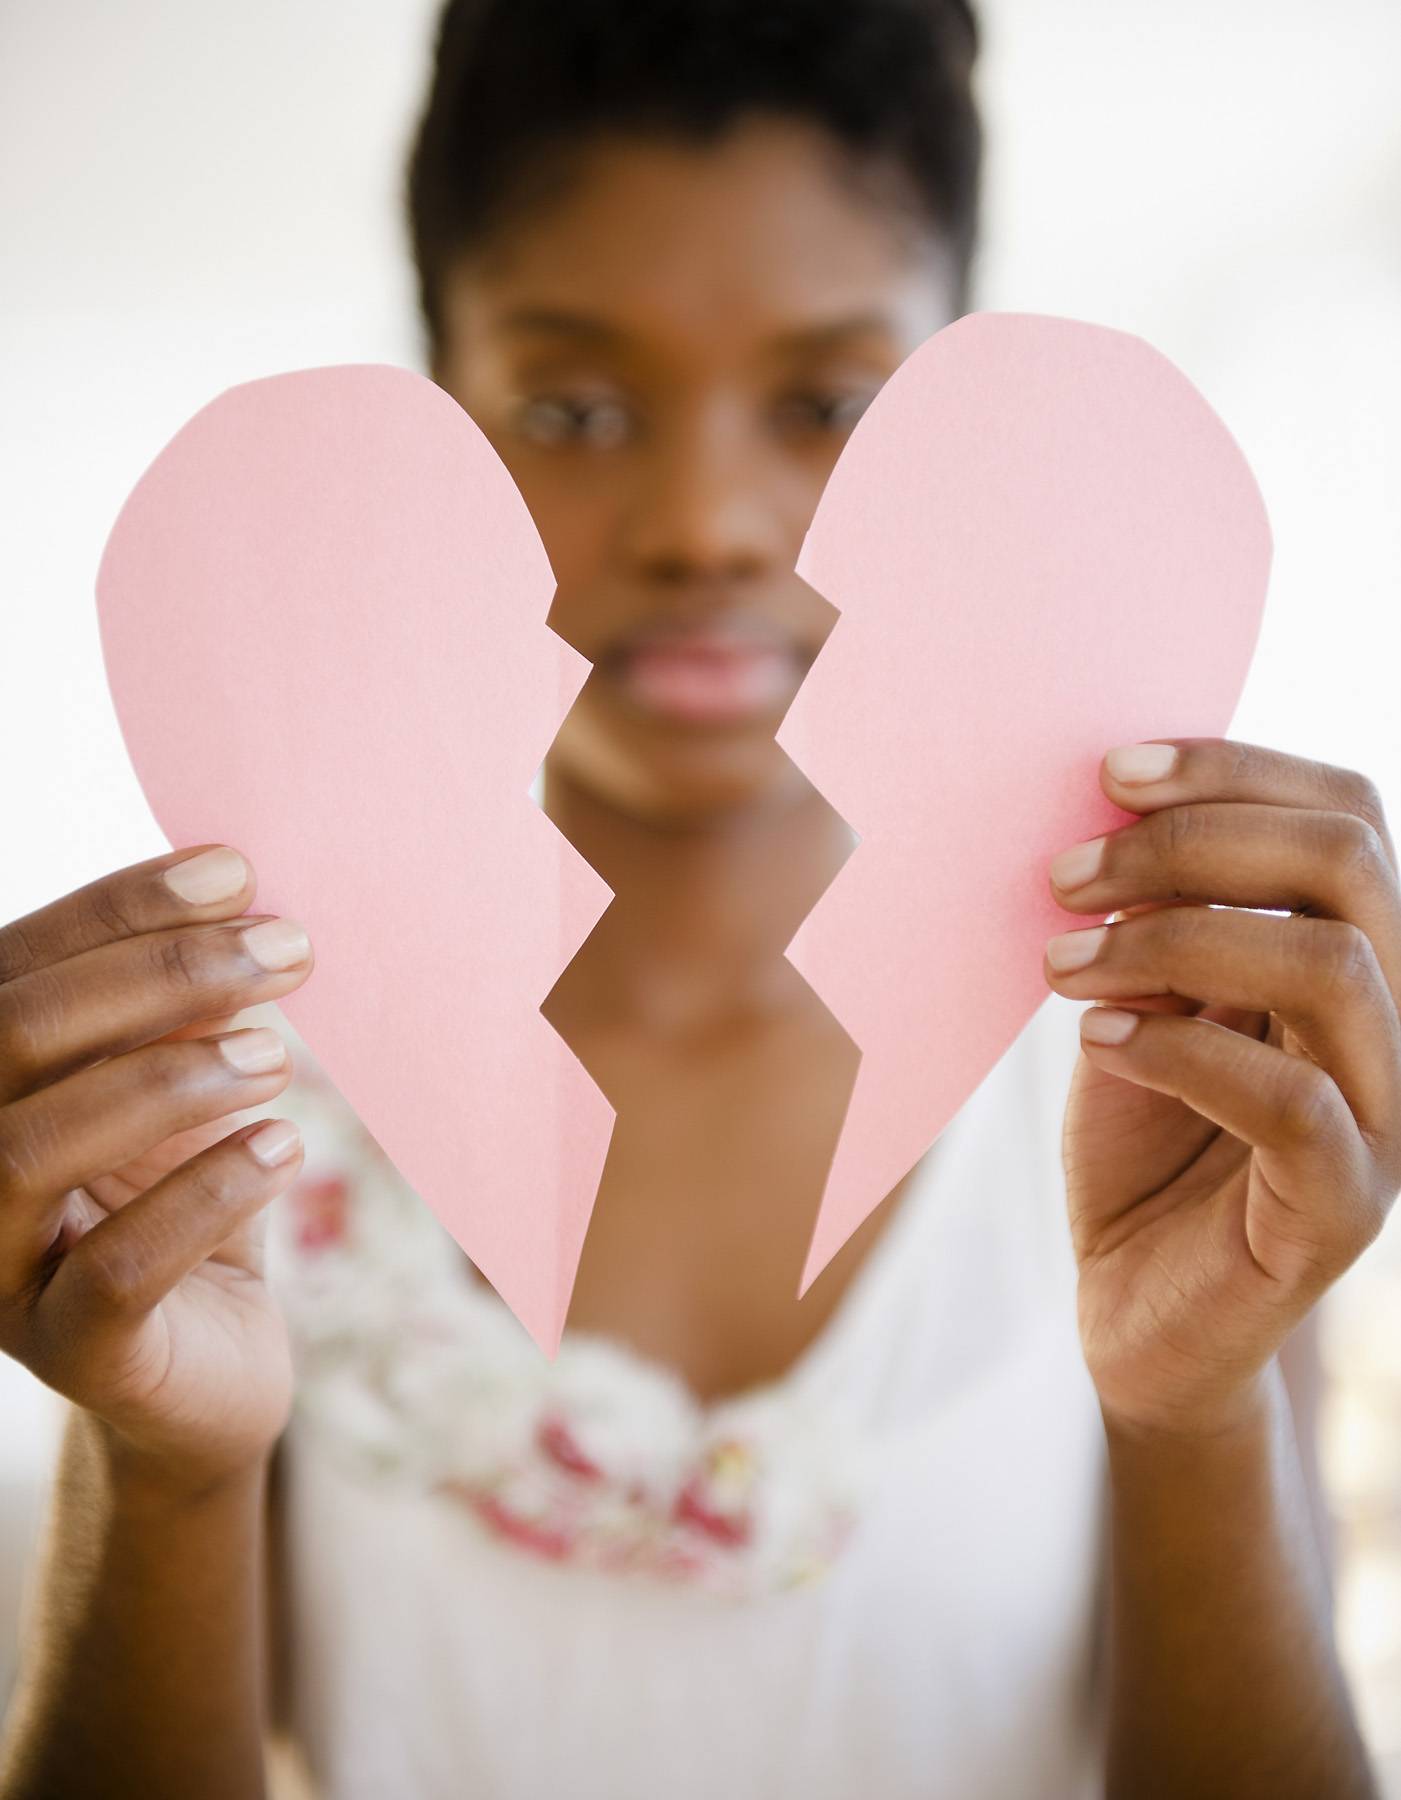 Black woman holding broken paper heart